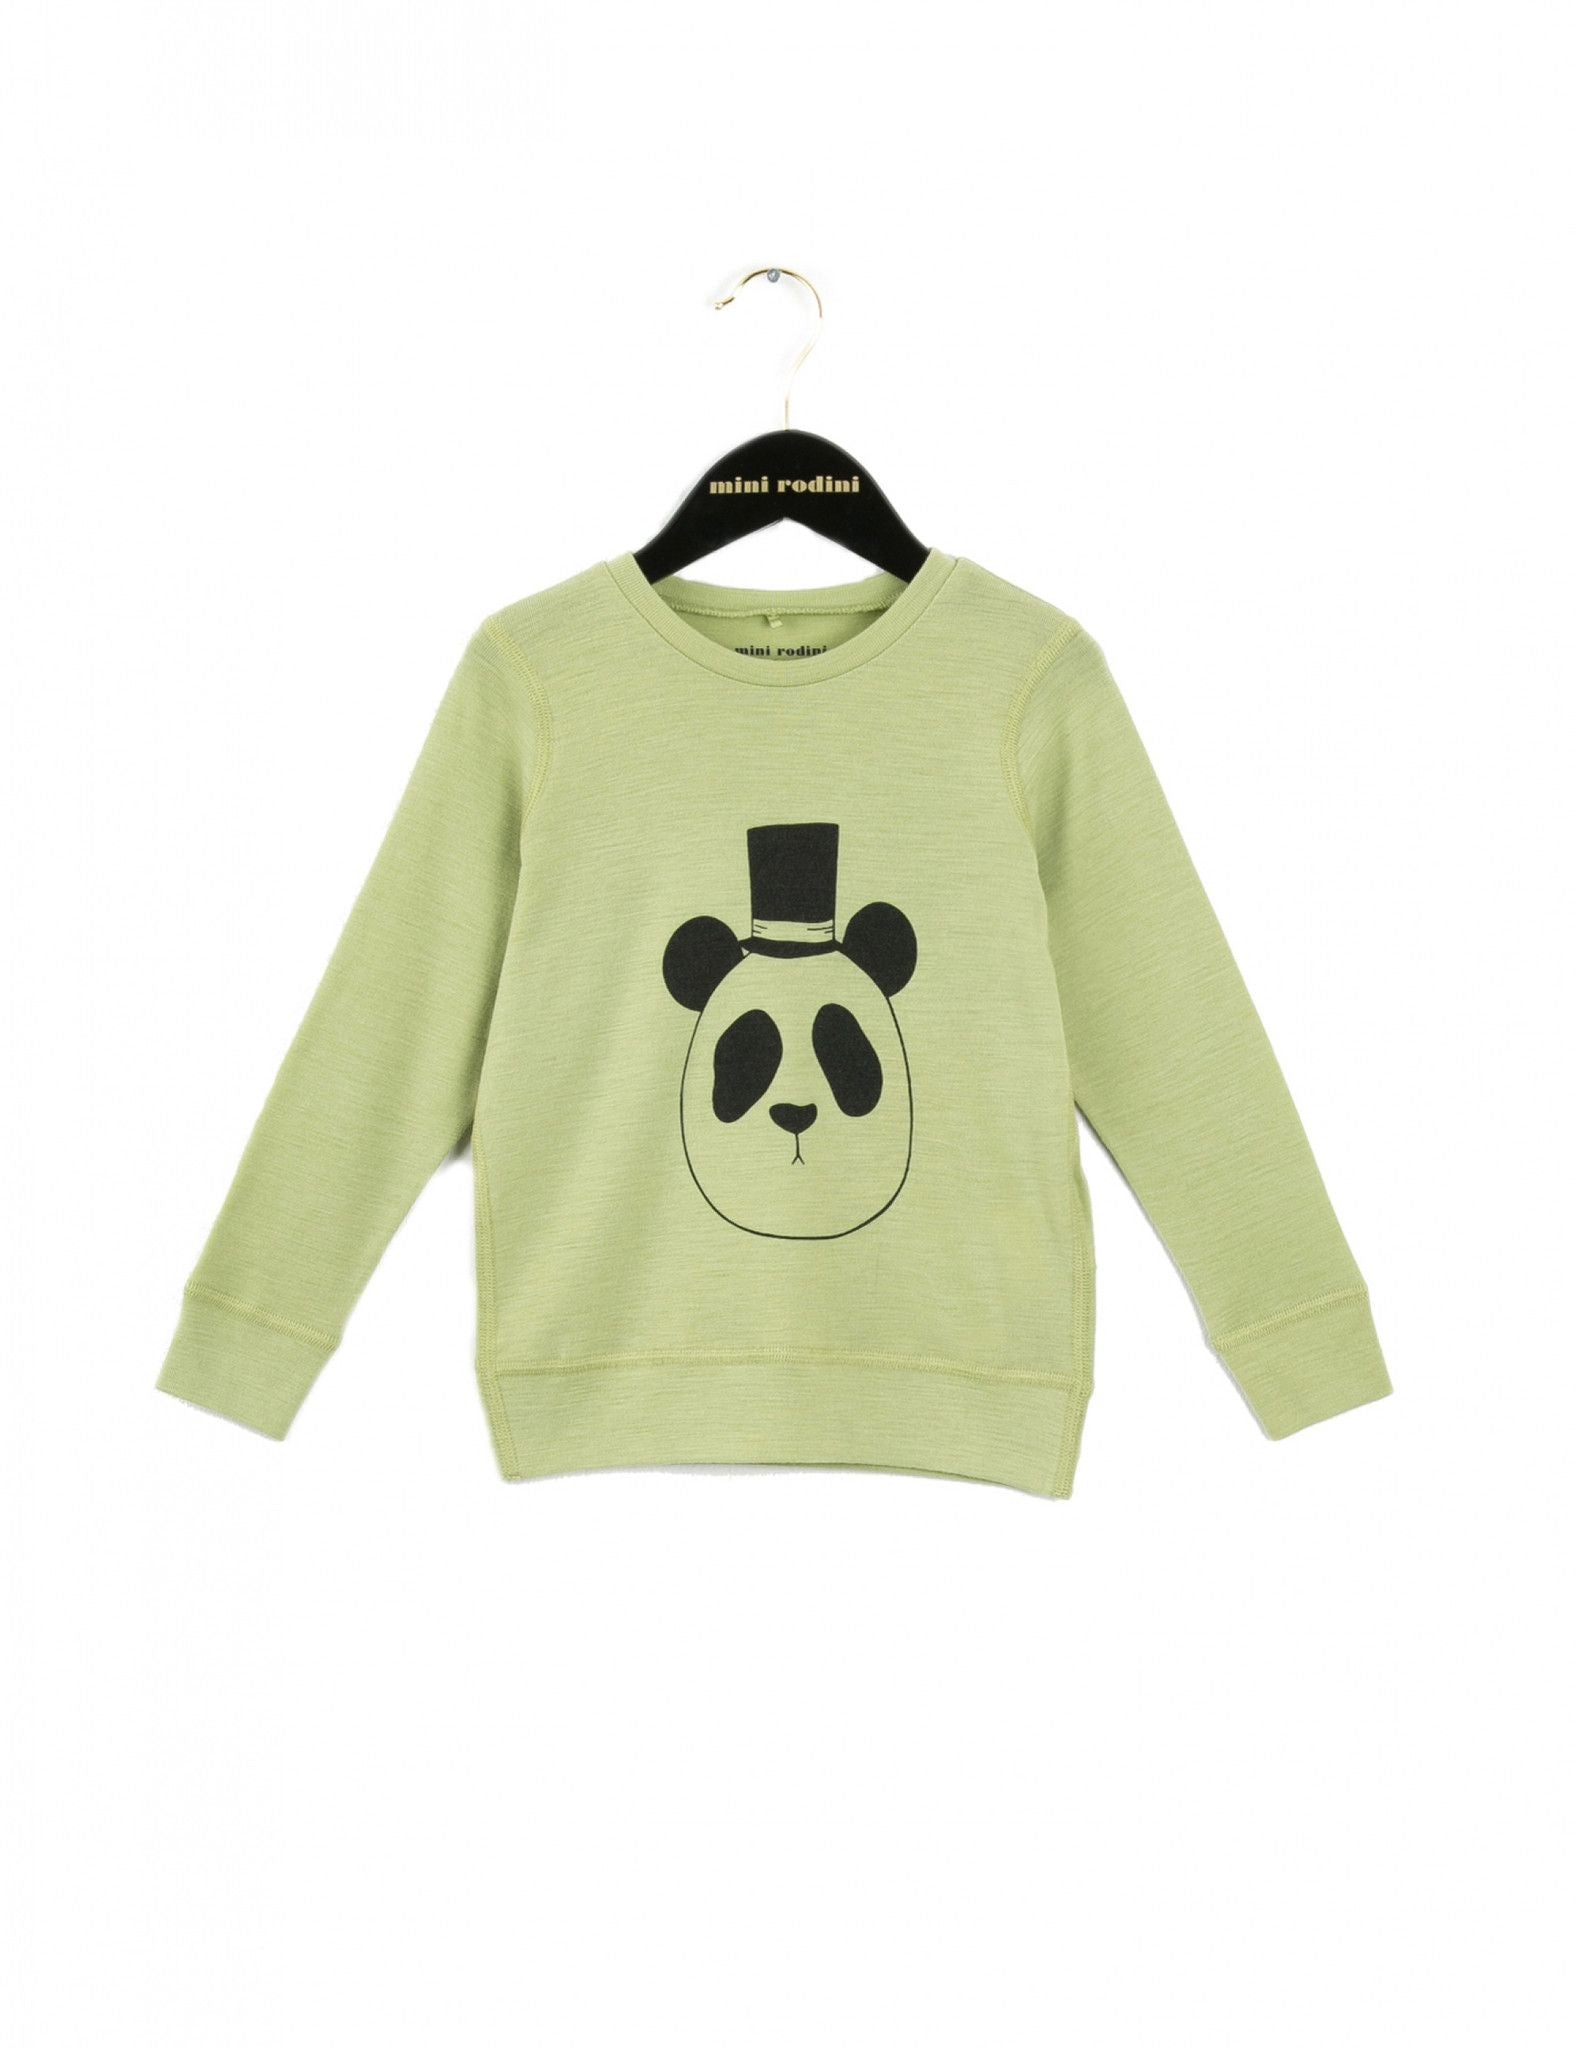 Panda Green Wool Base Layer Shirt - CÉMAROSE | Children's Fashion Store - 1